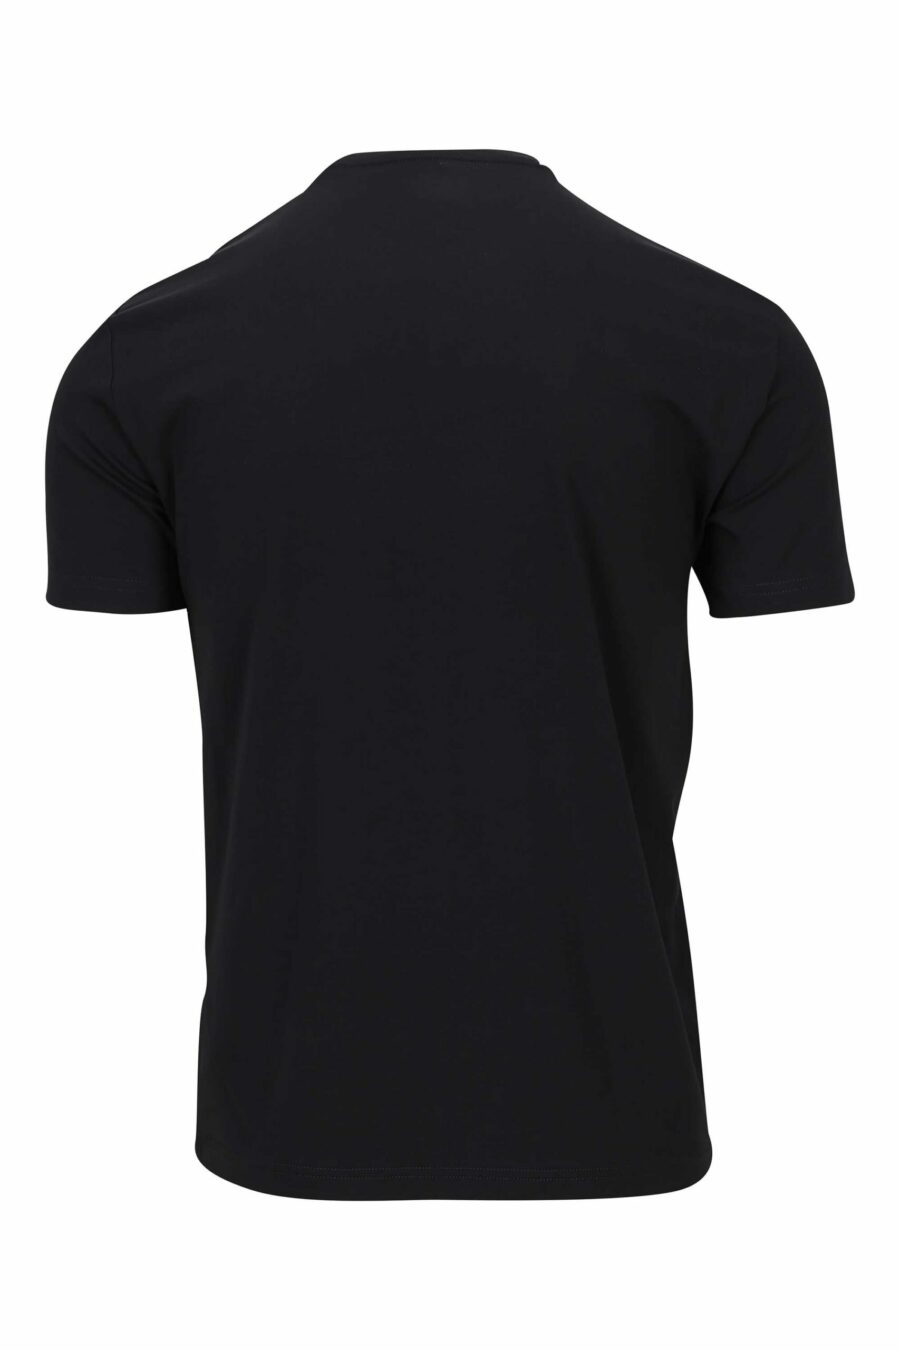 T-shirt preta com azul "lux identity" mix maxilogo - 8056787953161 1 scaled